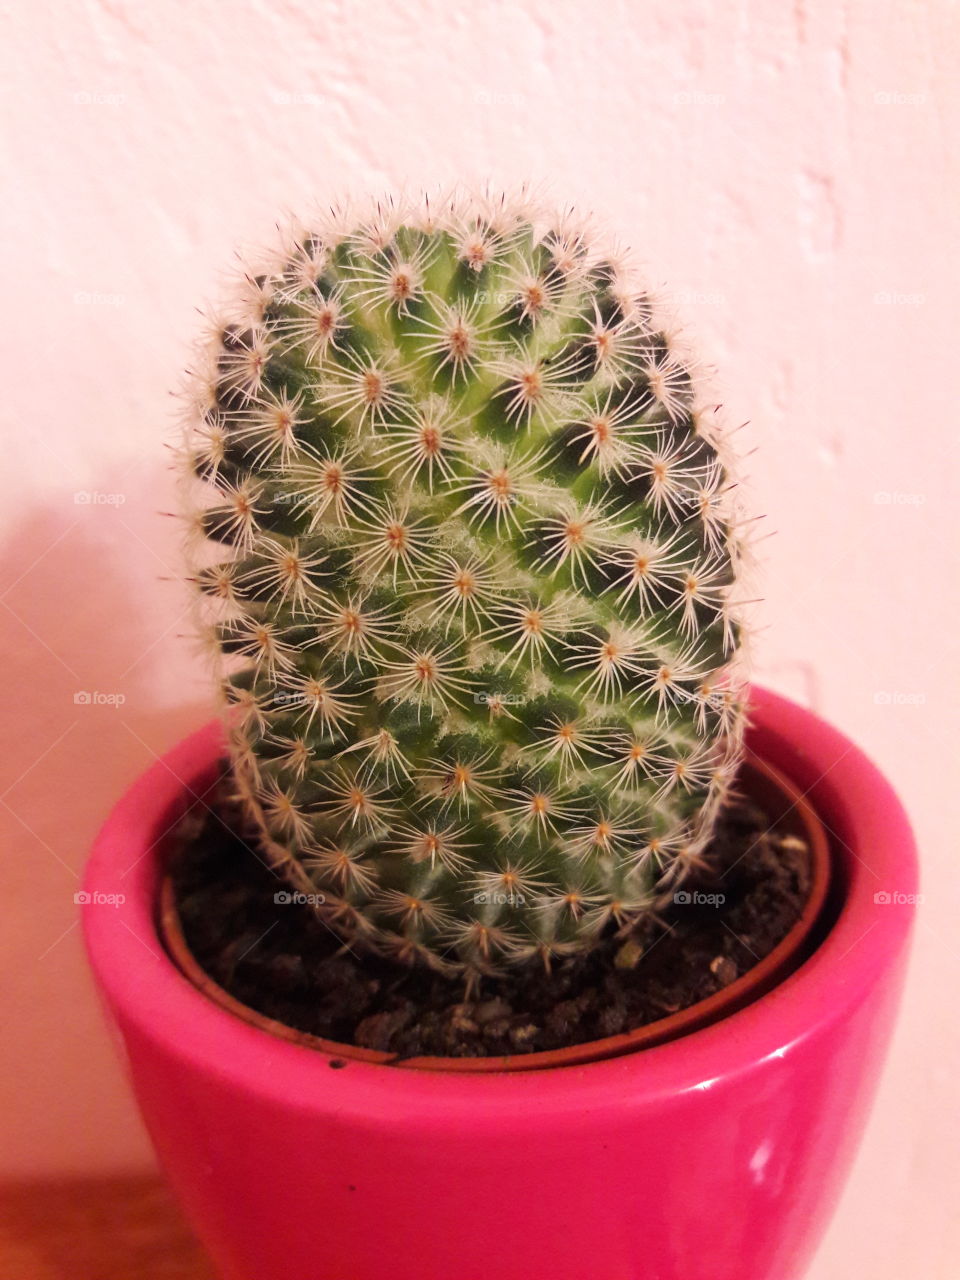 my little cactus